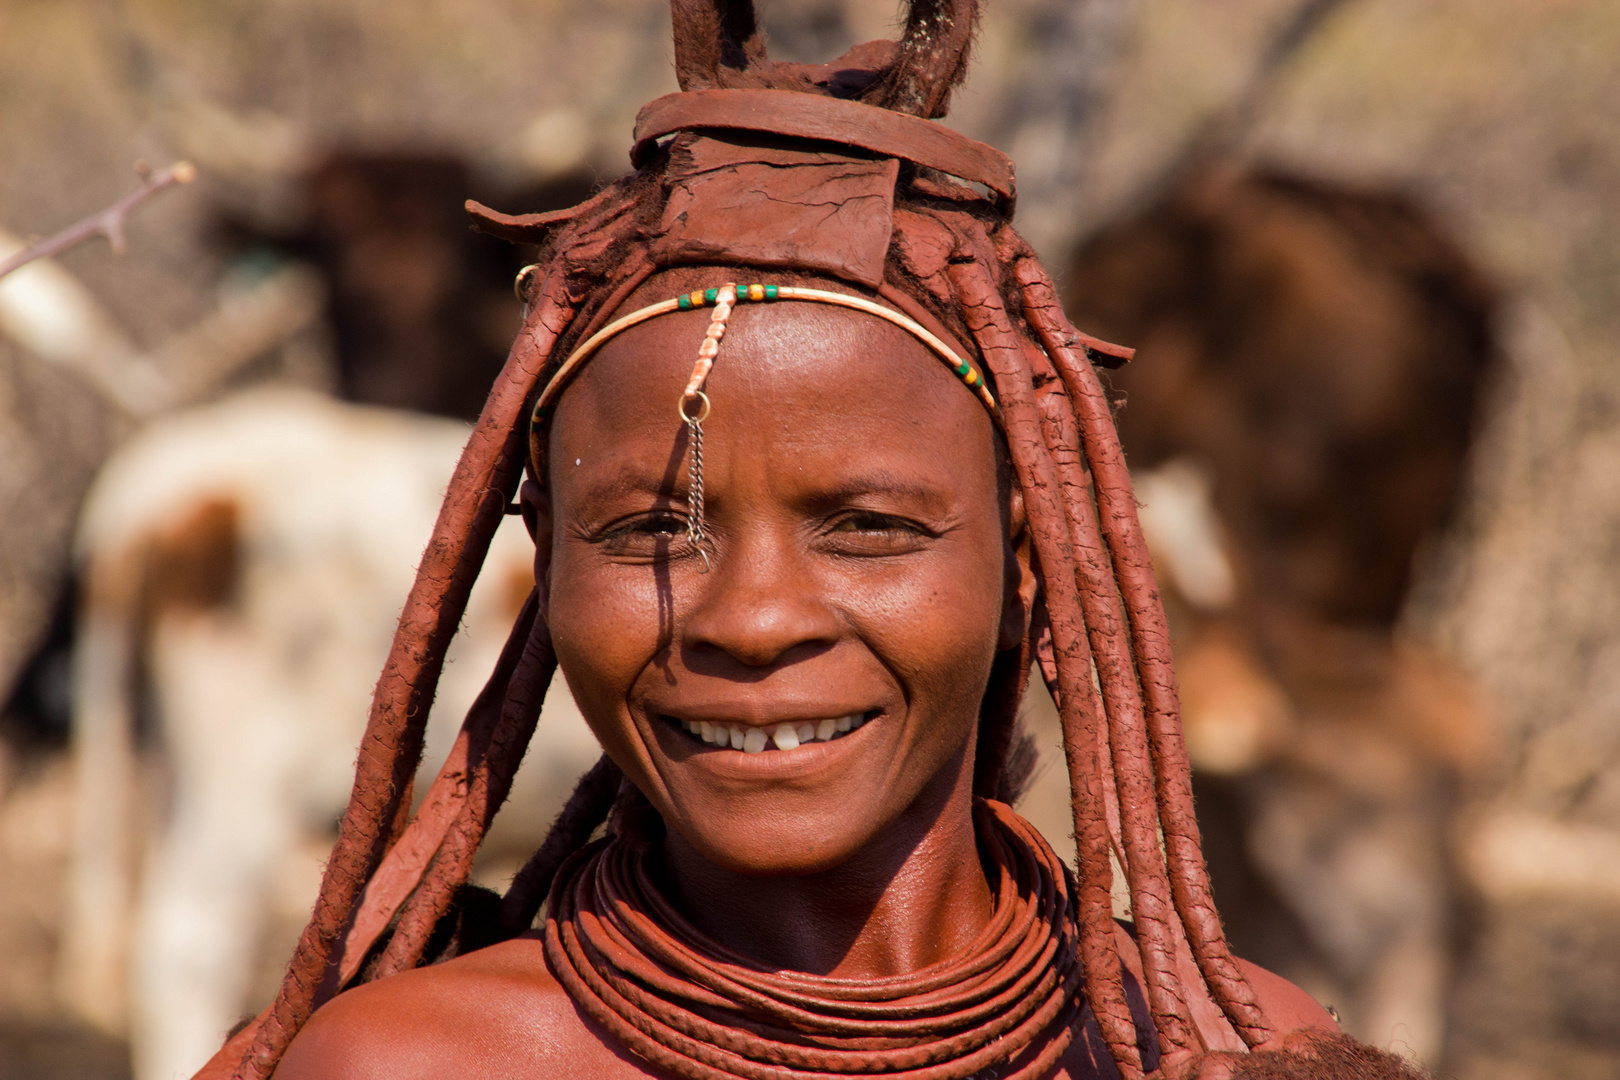 Himbafrau, Himbawomen in Namibia